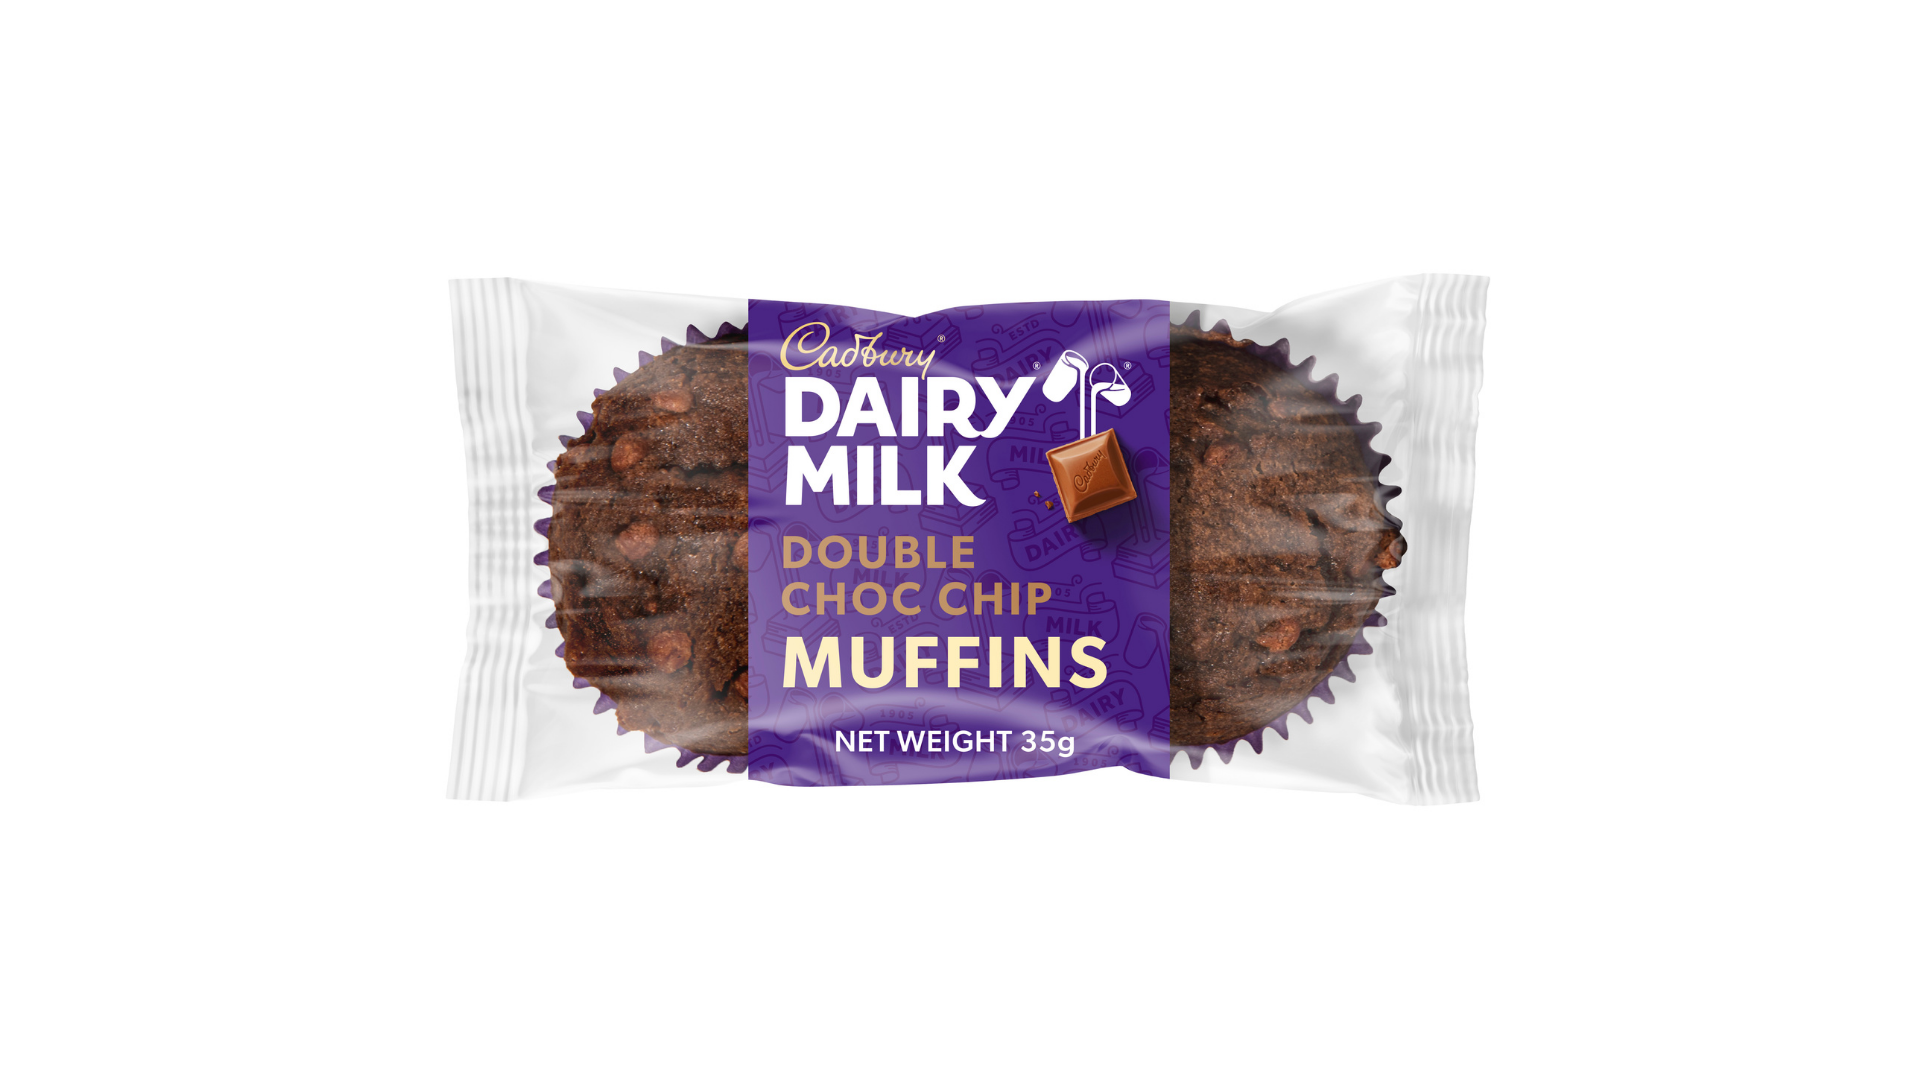 Cadbury Dairy Milk Muffins 2 pack.png